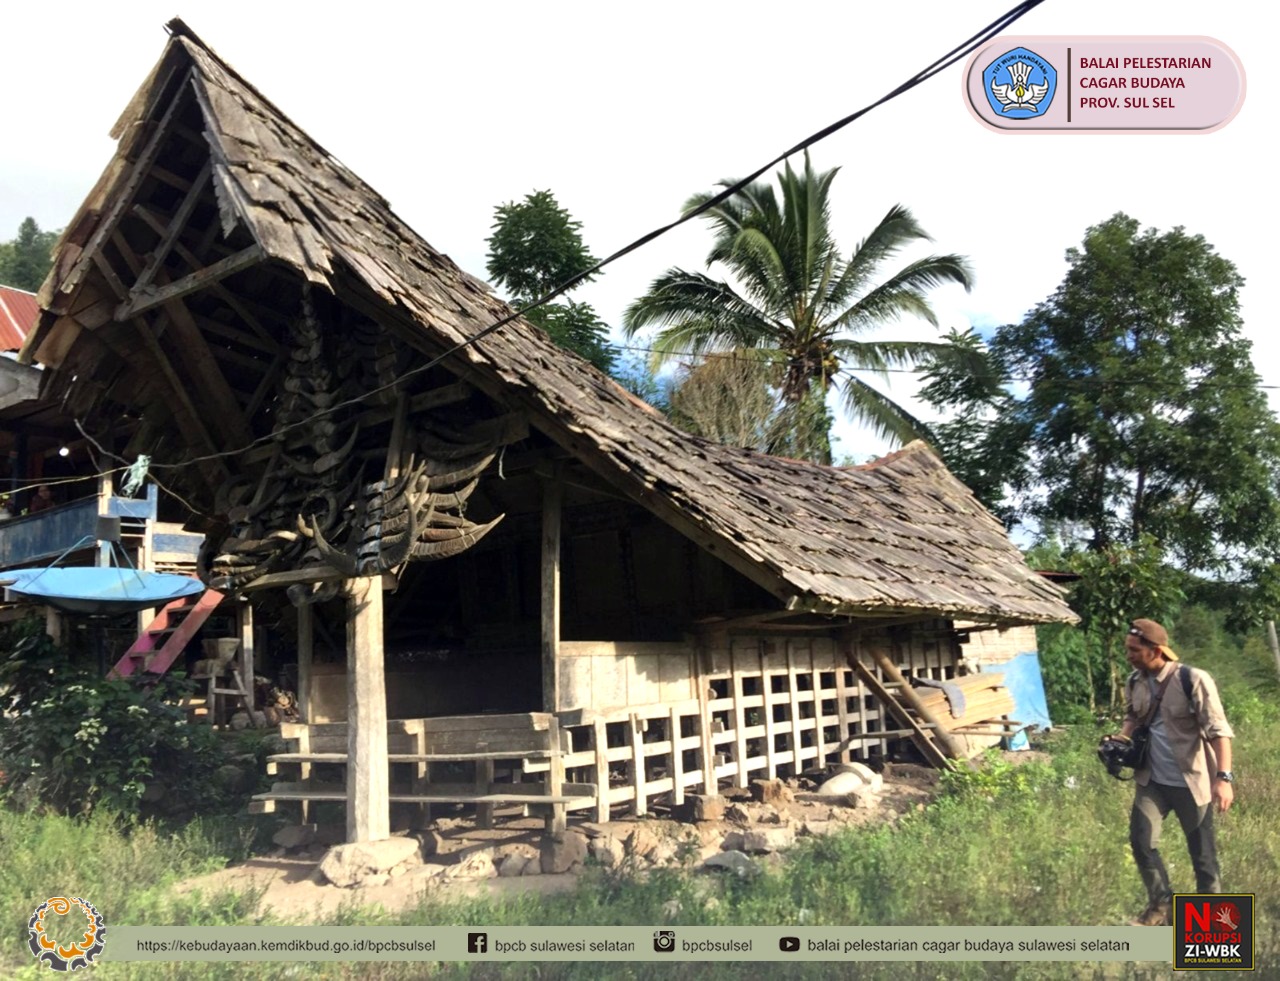 You are currently viewing Survei Penyelamatan Komponen Pemukiman Tradisional Suppirang